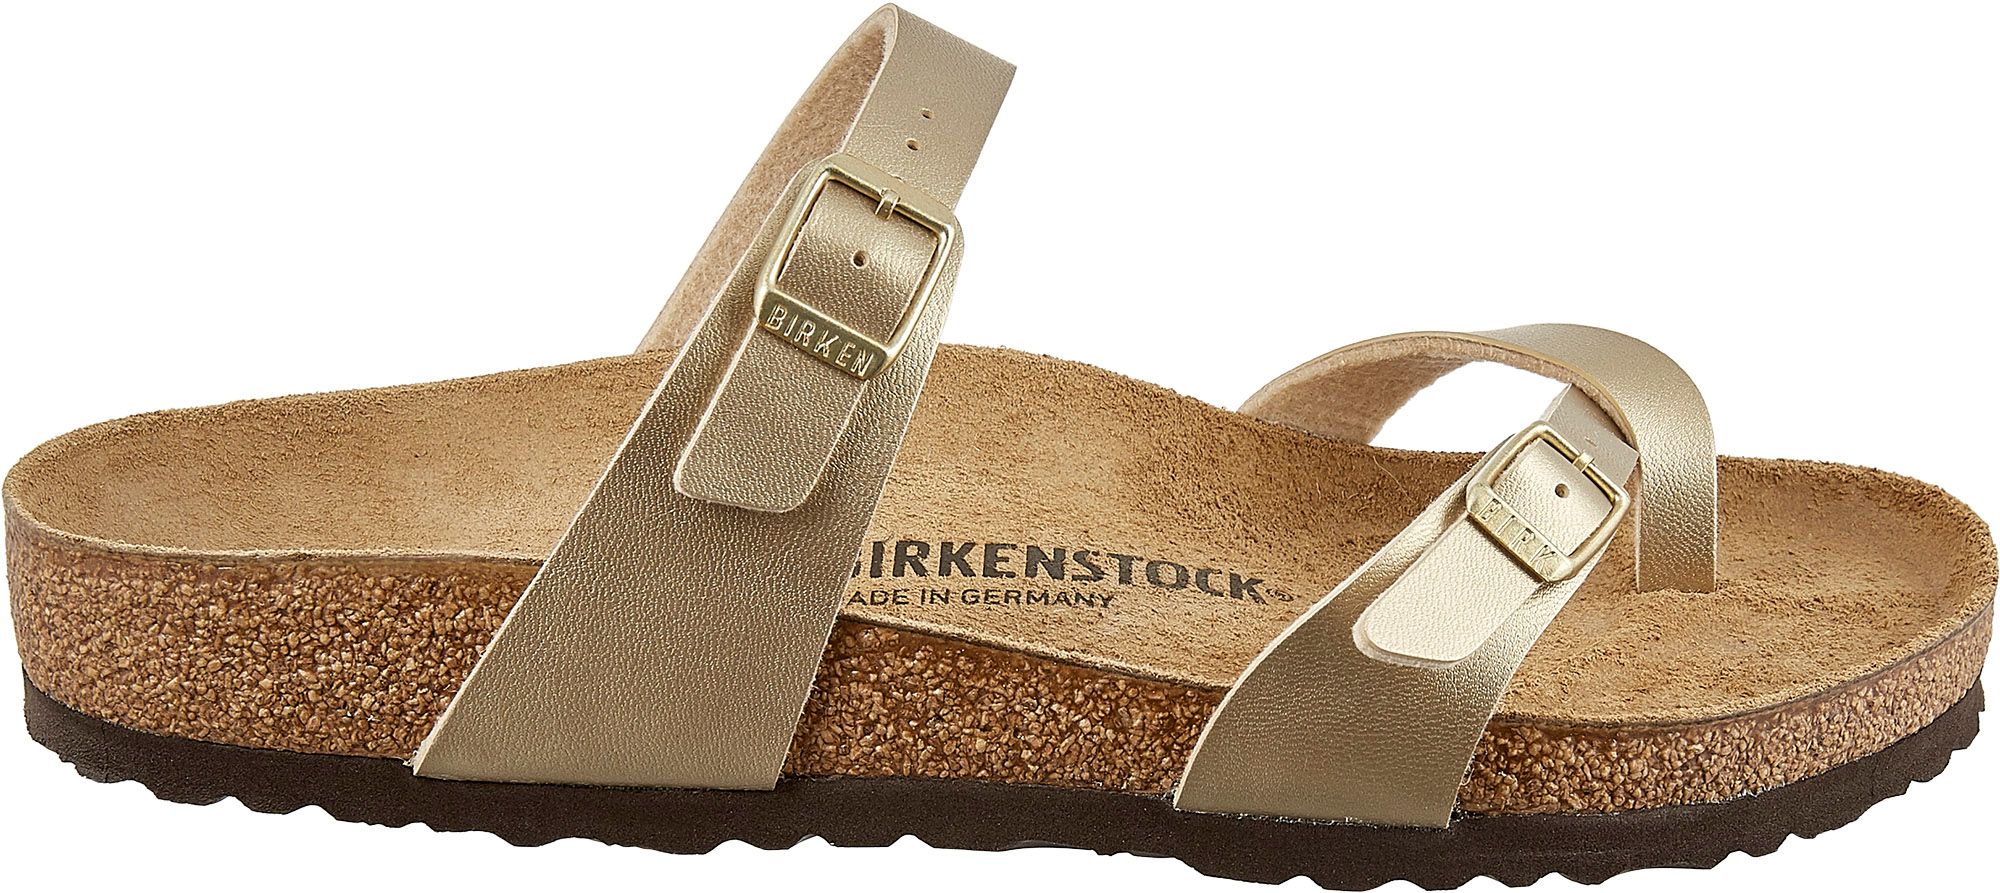 birkenstock women's mayari footbed sandal